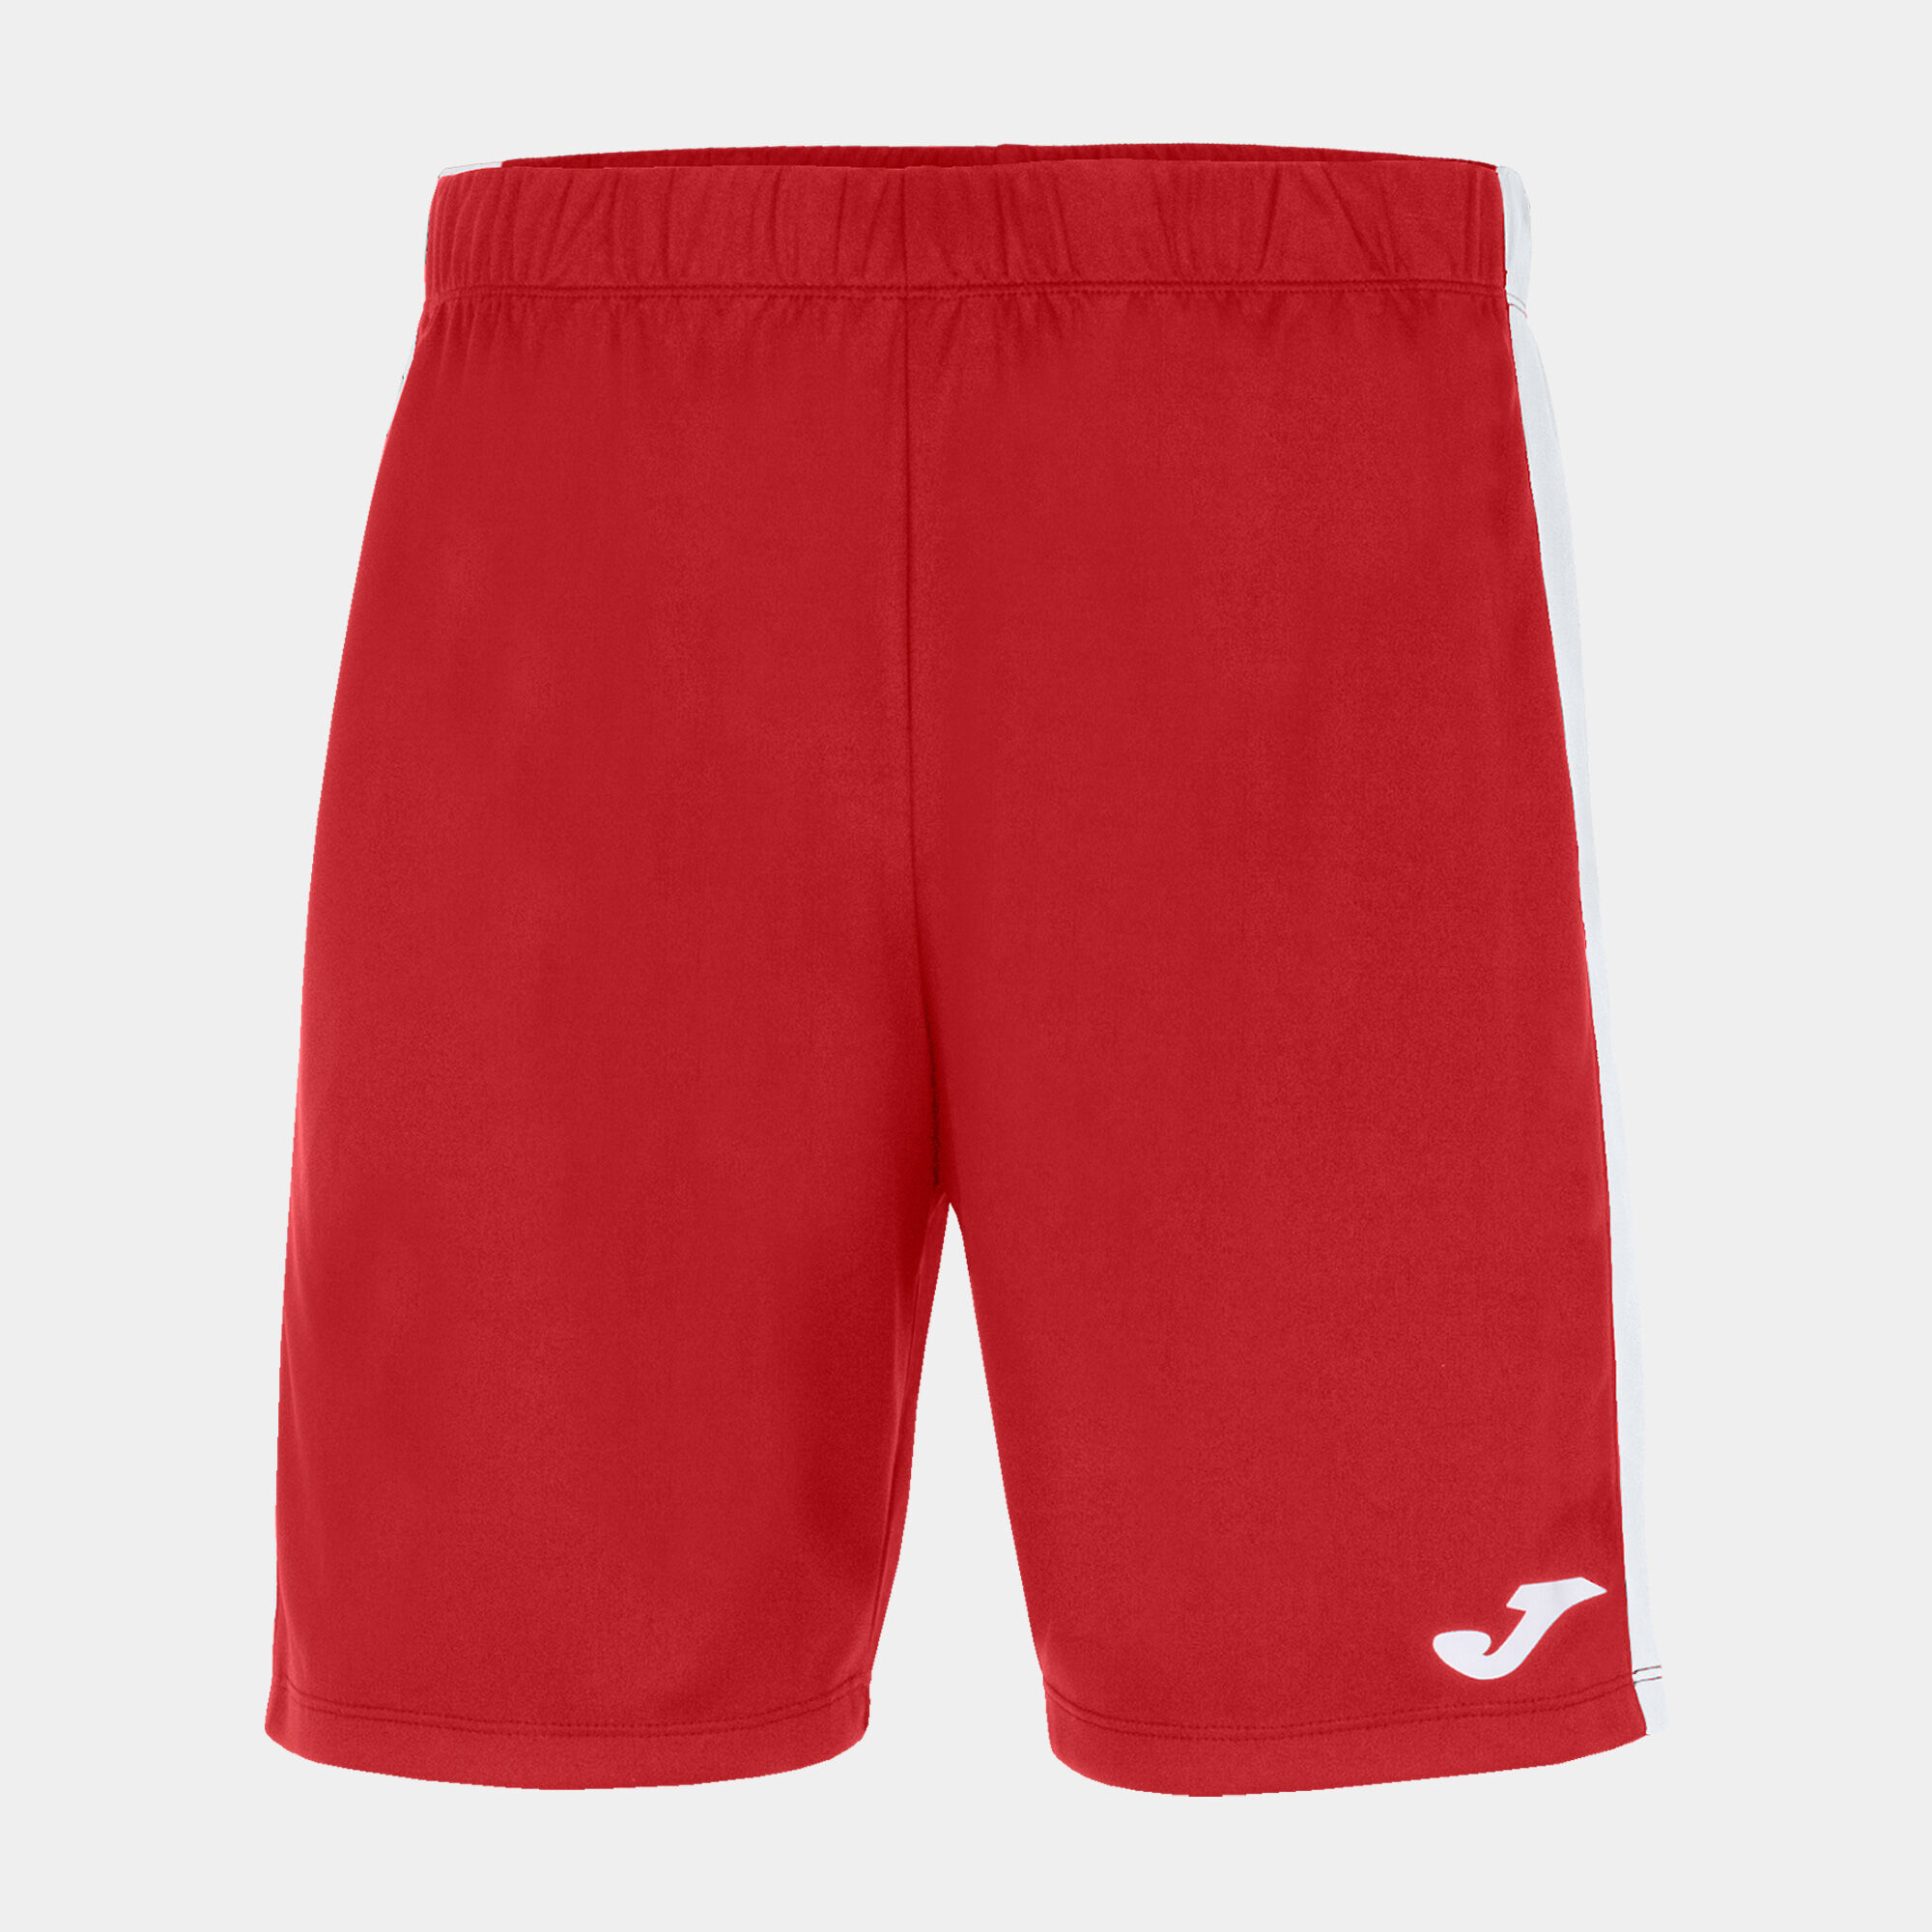 Renueva tu outfit deportivo con este pantalón Joma ¡por tan solo 11 euros!